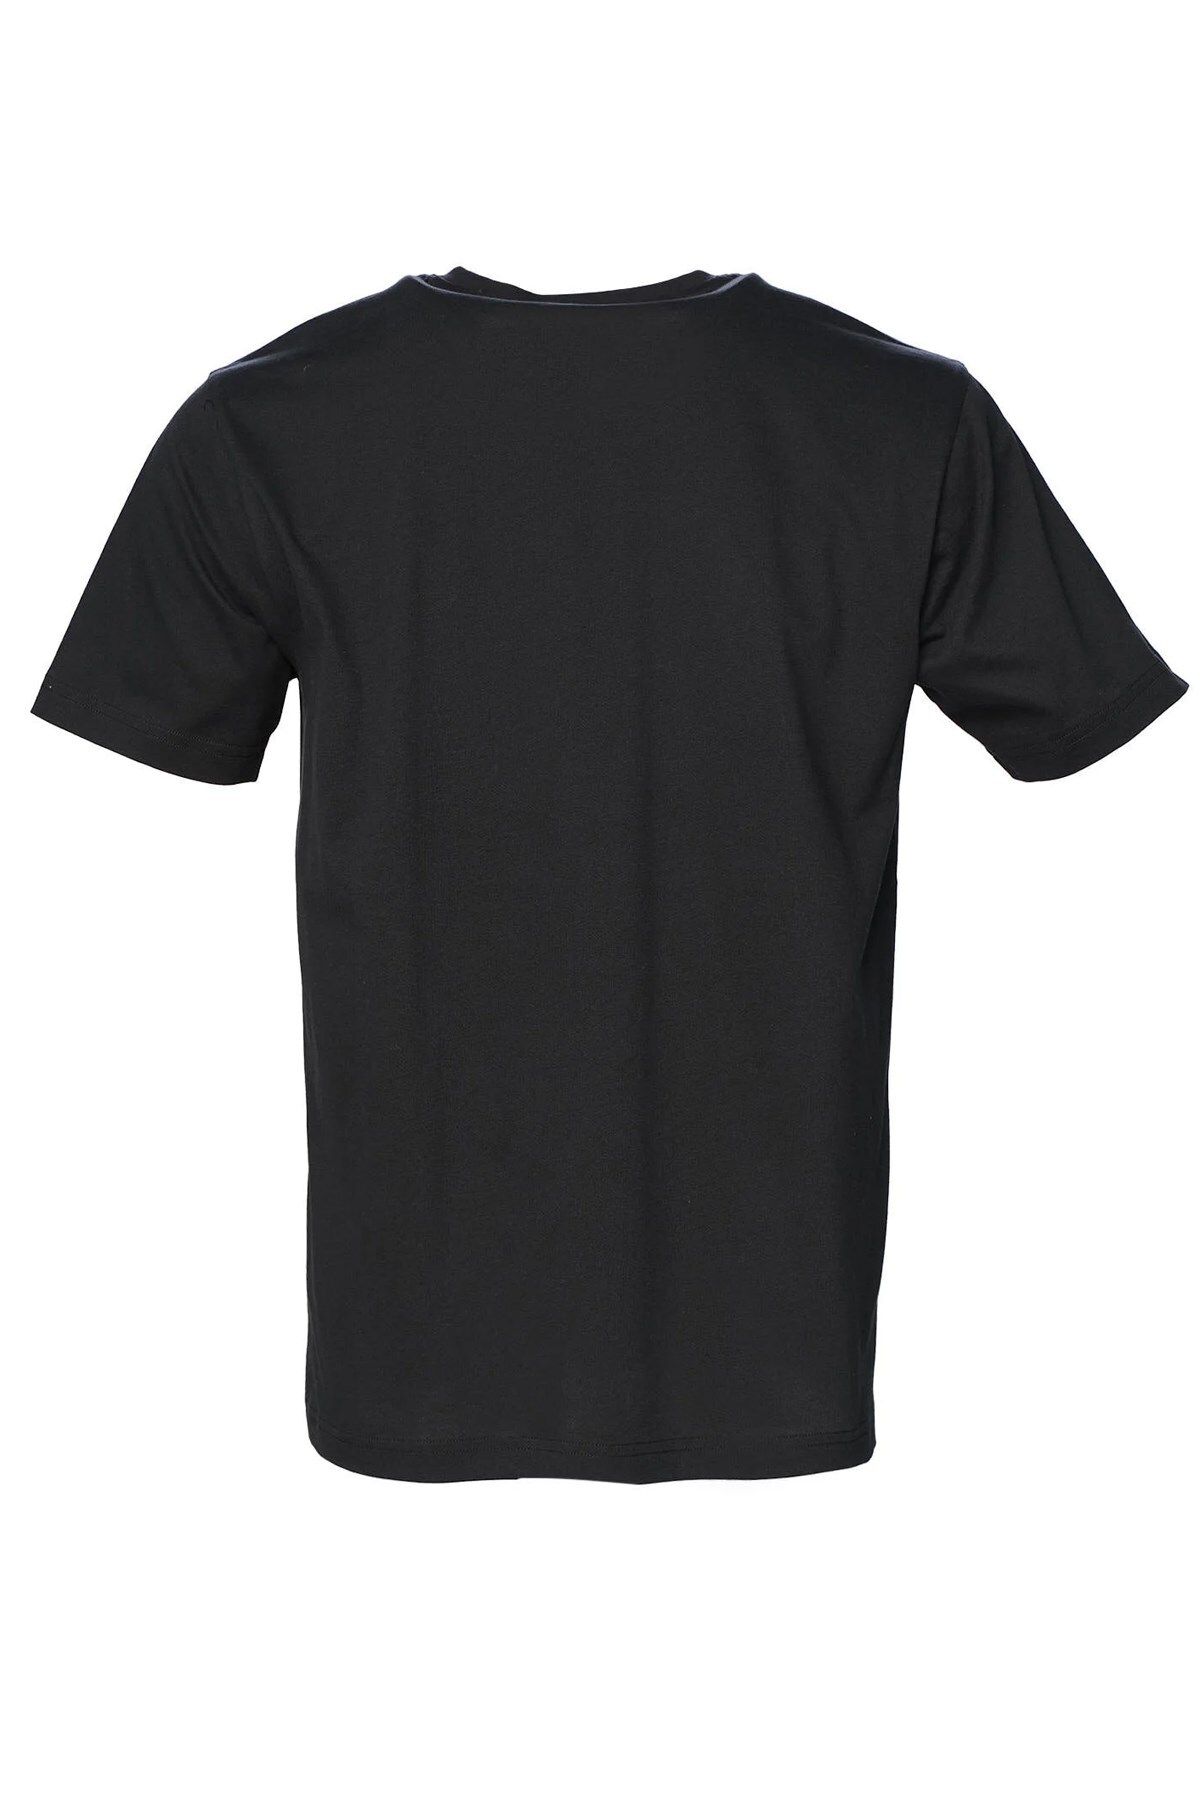 hummel تی شرت مردان را تقسیم کنید 911794-2001